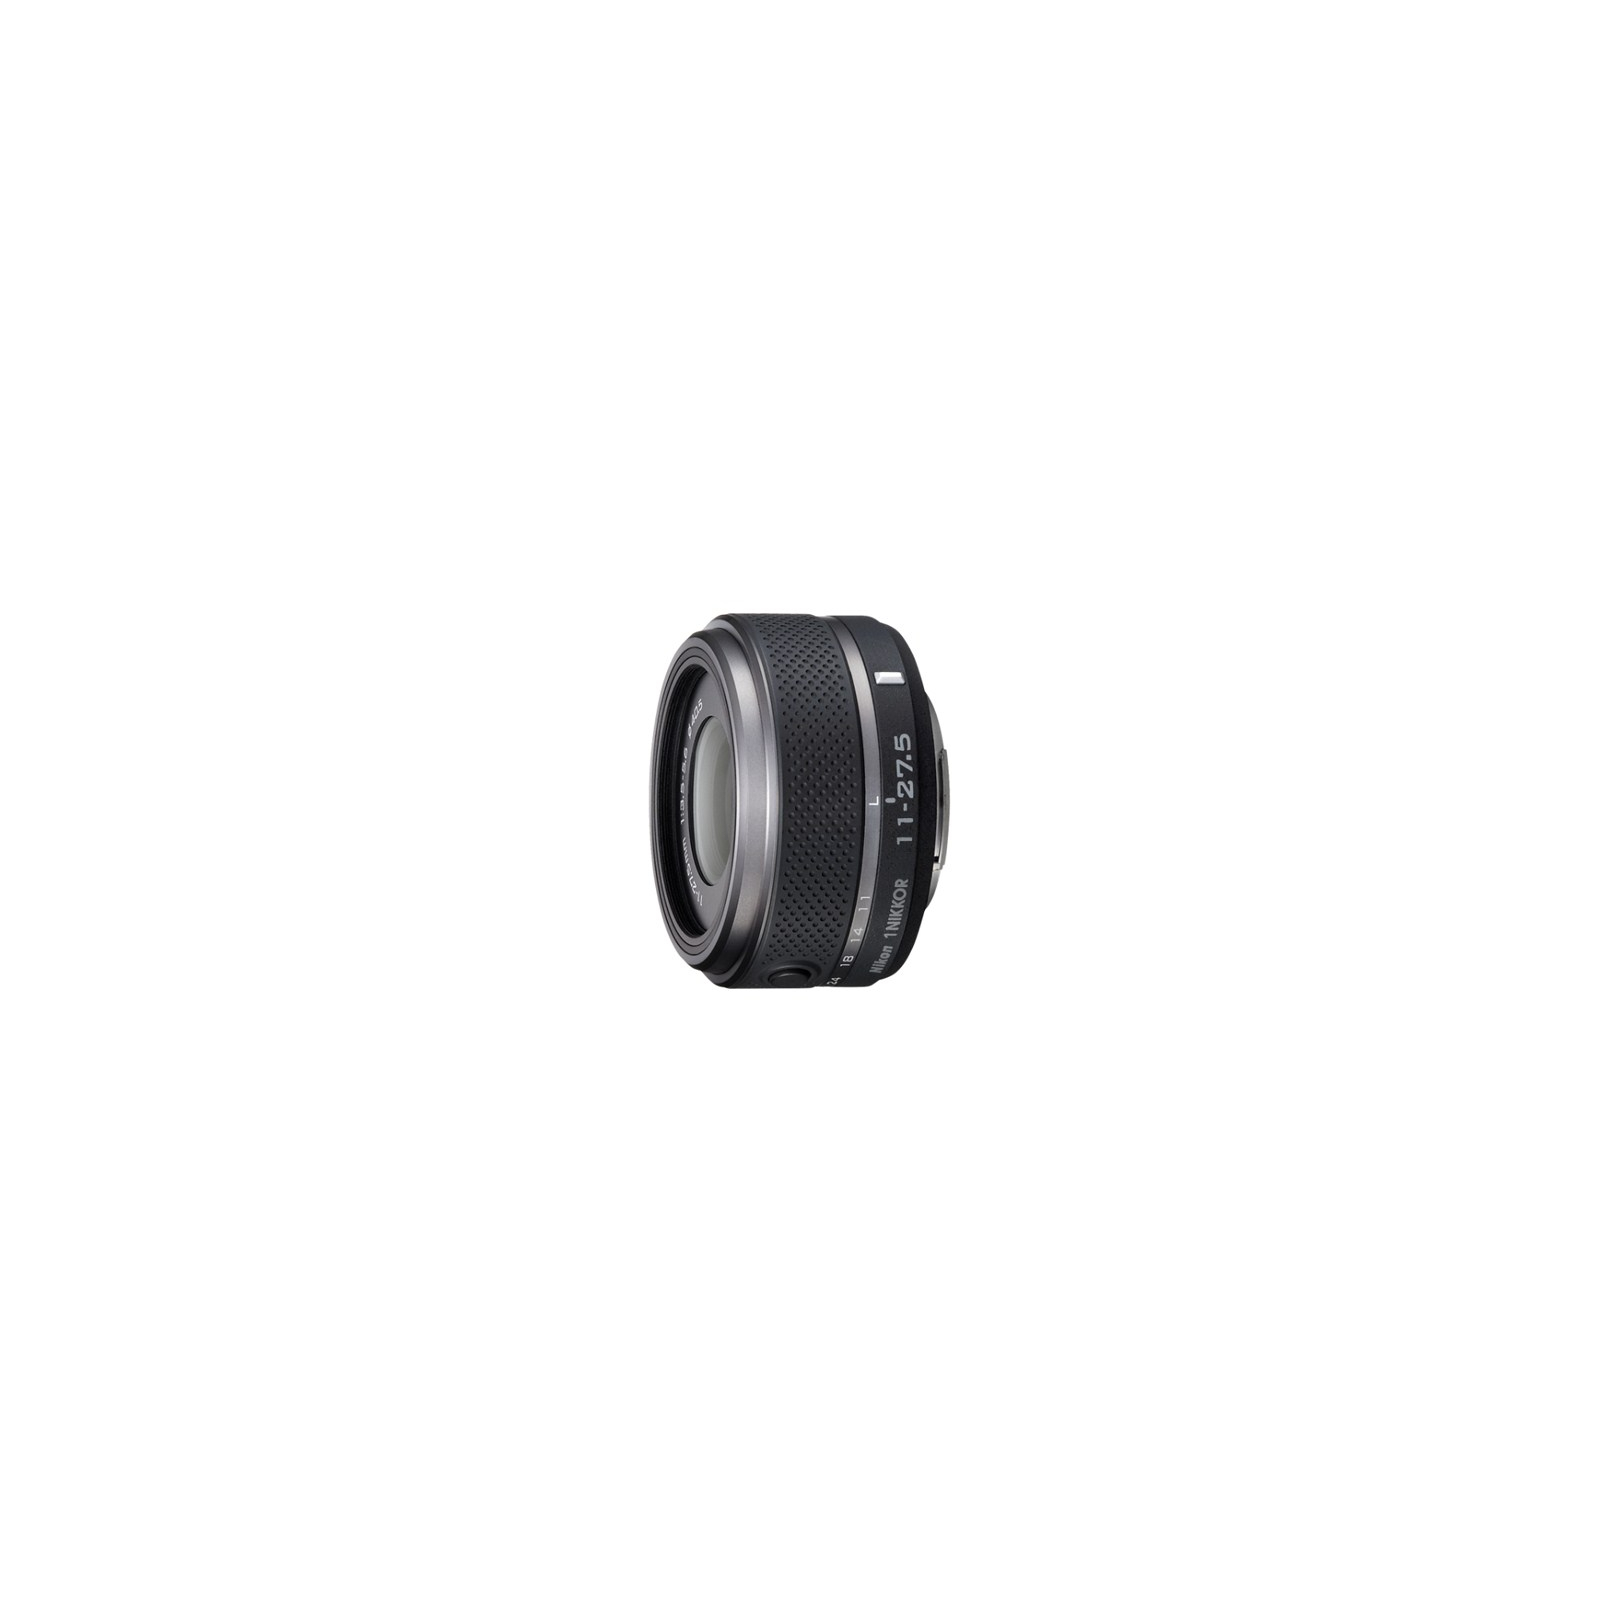 Объектив Nikon 1 Nikkor 11-27.5mm f/3.5-5.6 black (JVA704DA)